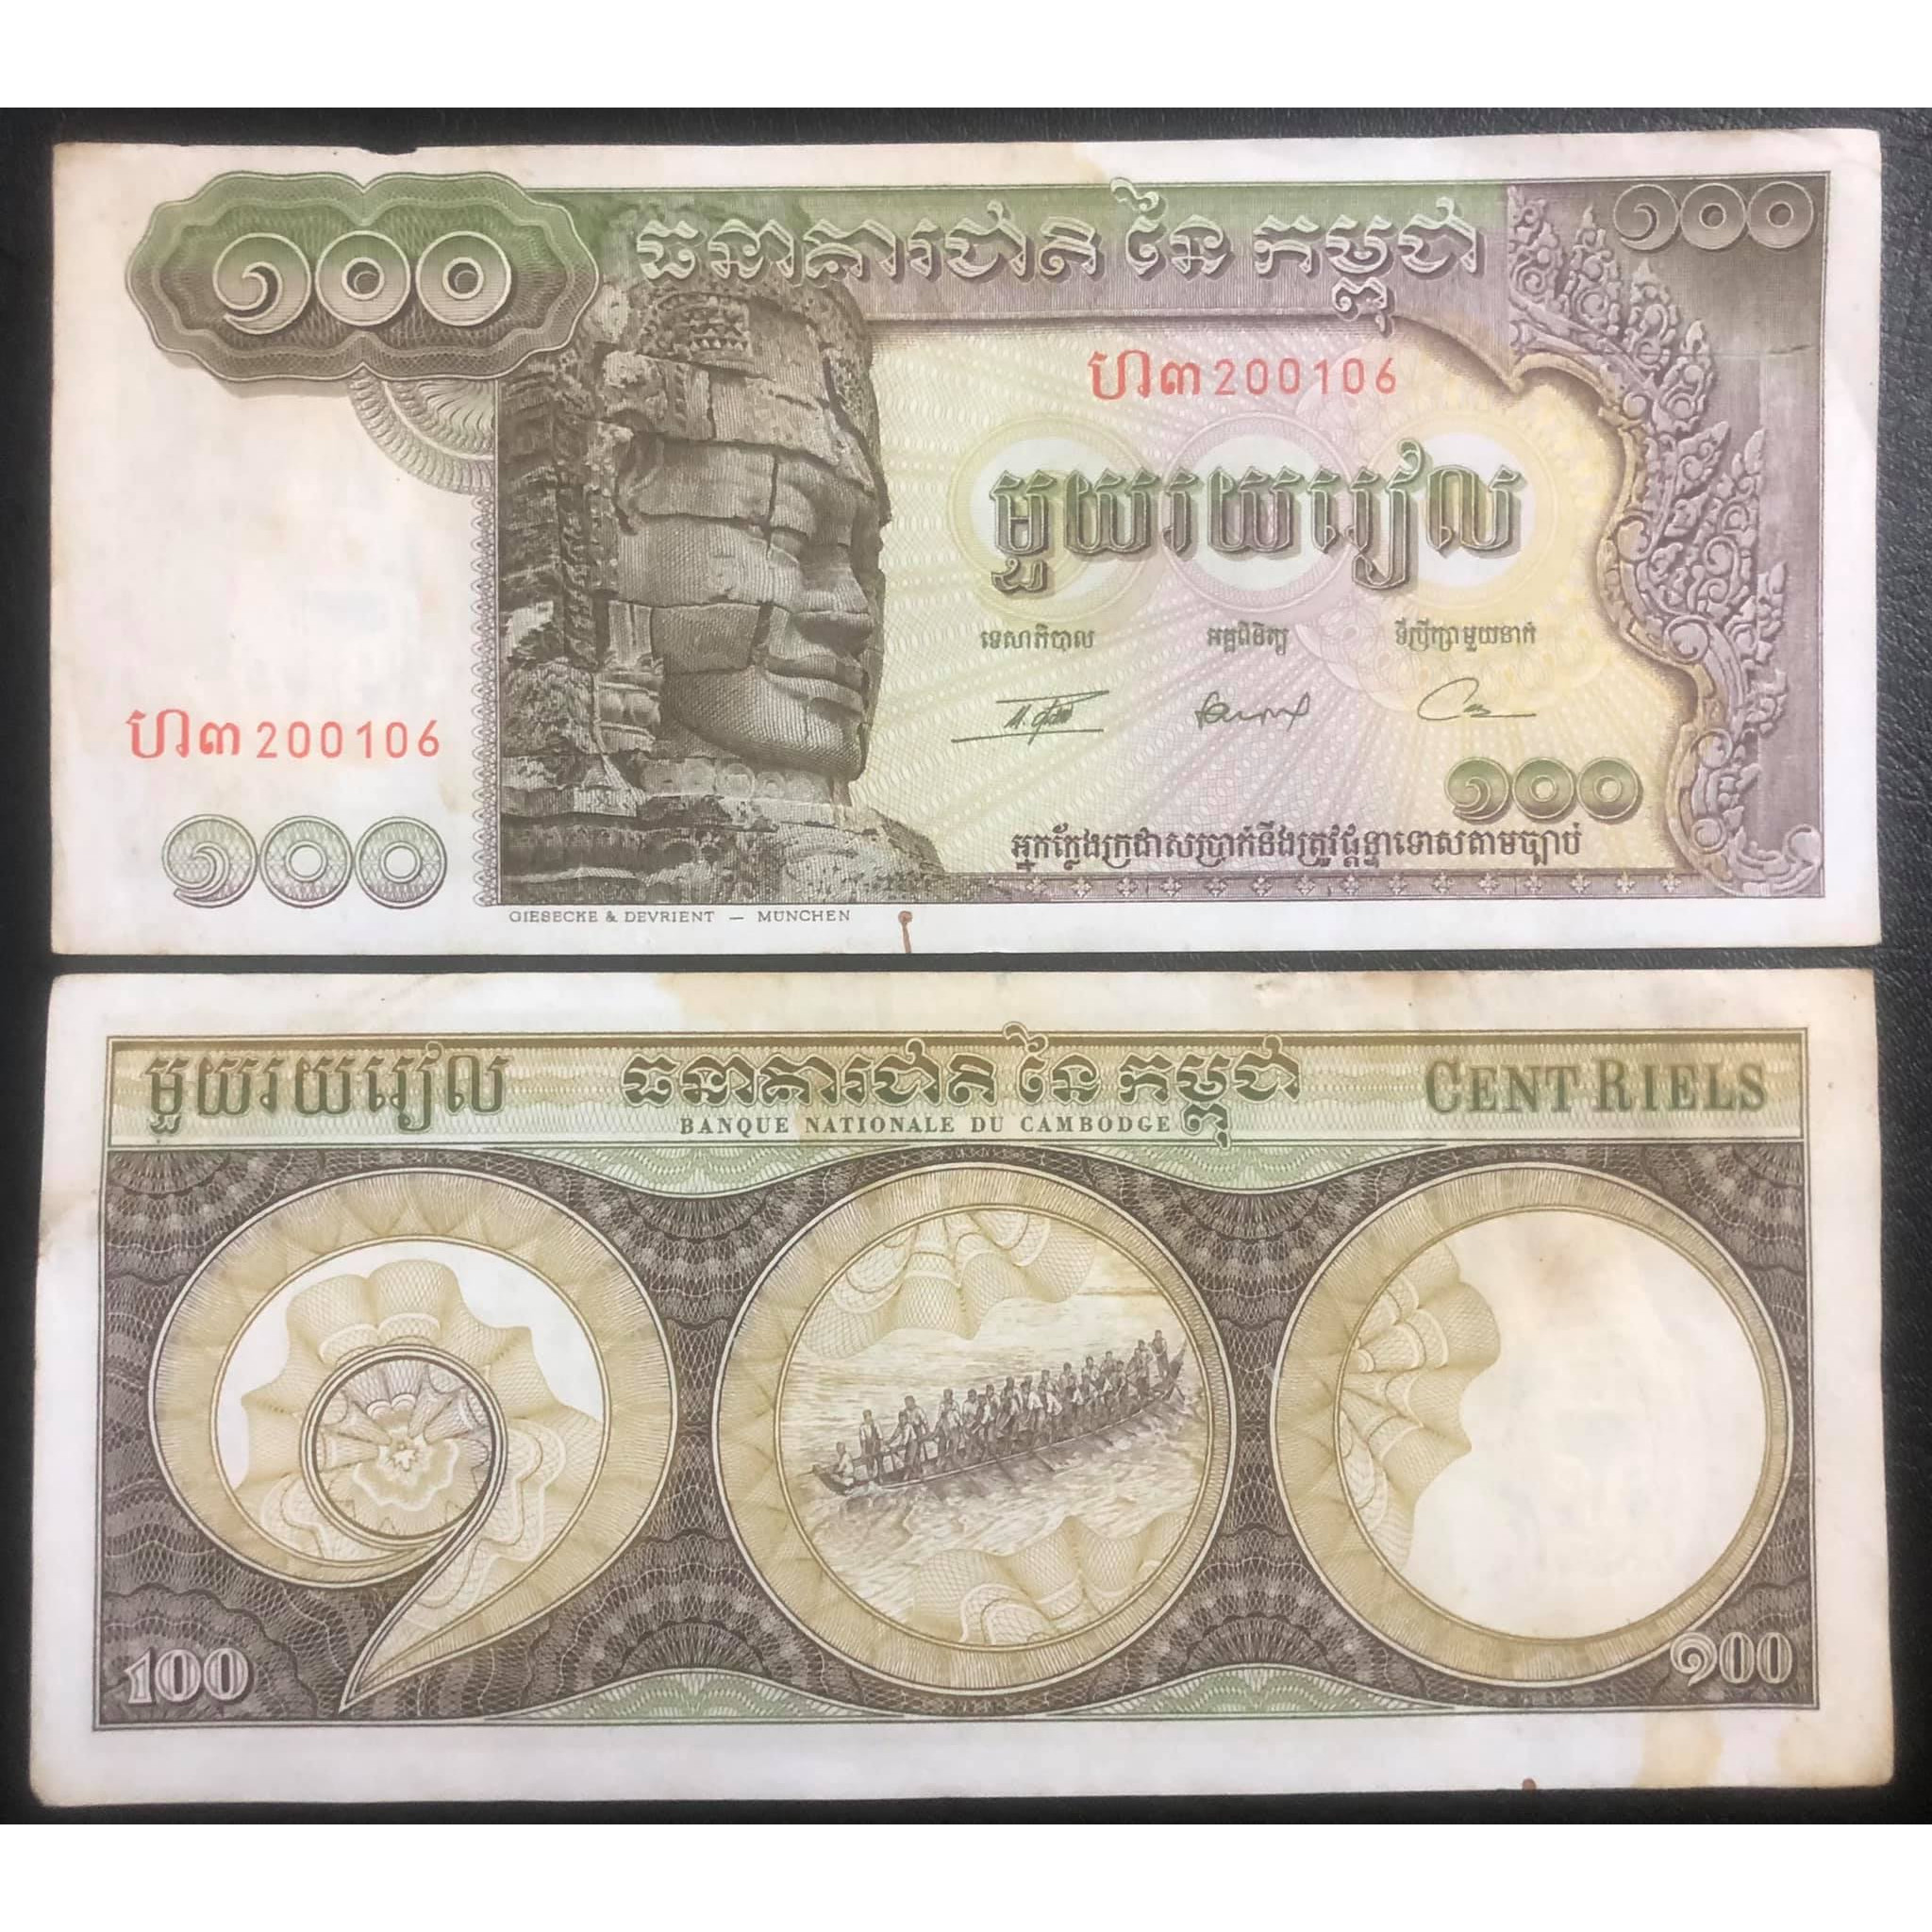 Tiền cổ Campuchia 100 Riels khổ lớn